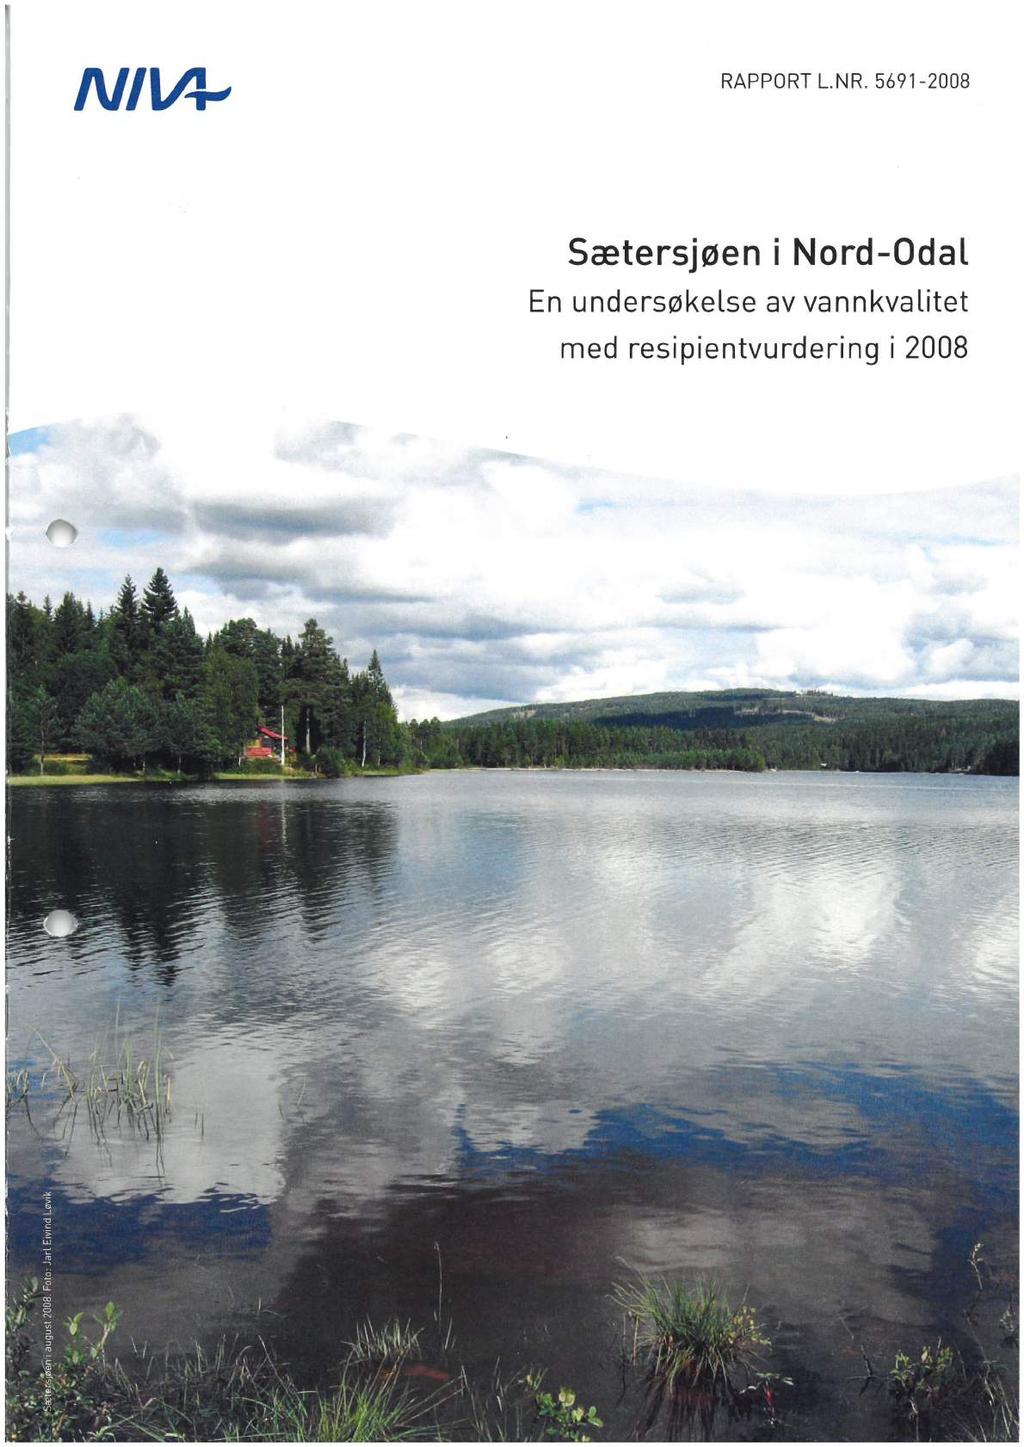 F NI V'1-v RAPPORT L.NR. 5691-2008 Sætersjøen i Nord-Odal En undersøkelse av vannkvalitet med resipientvurdering i 2008! à. å l-,..,,. 5.._,_.;'>.'~.